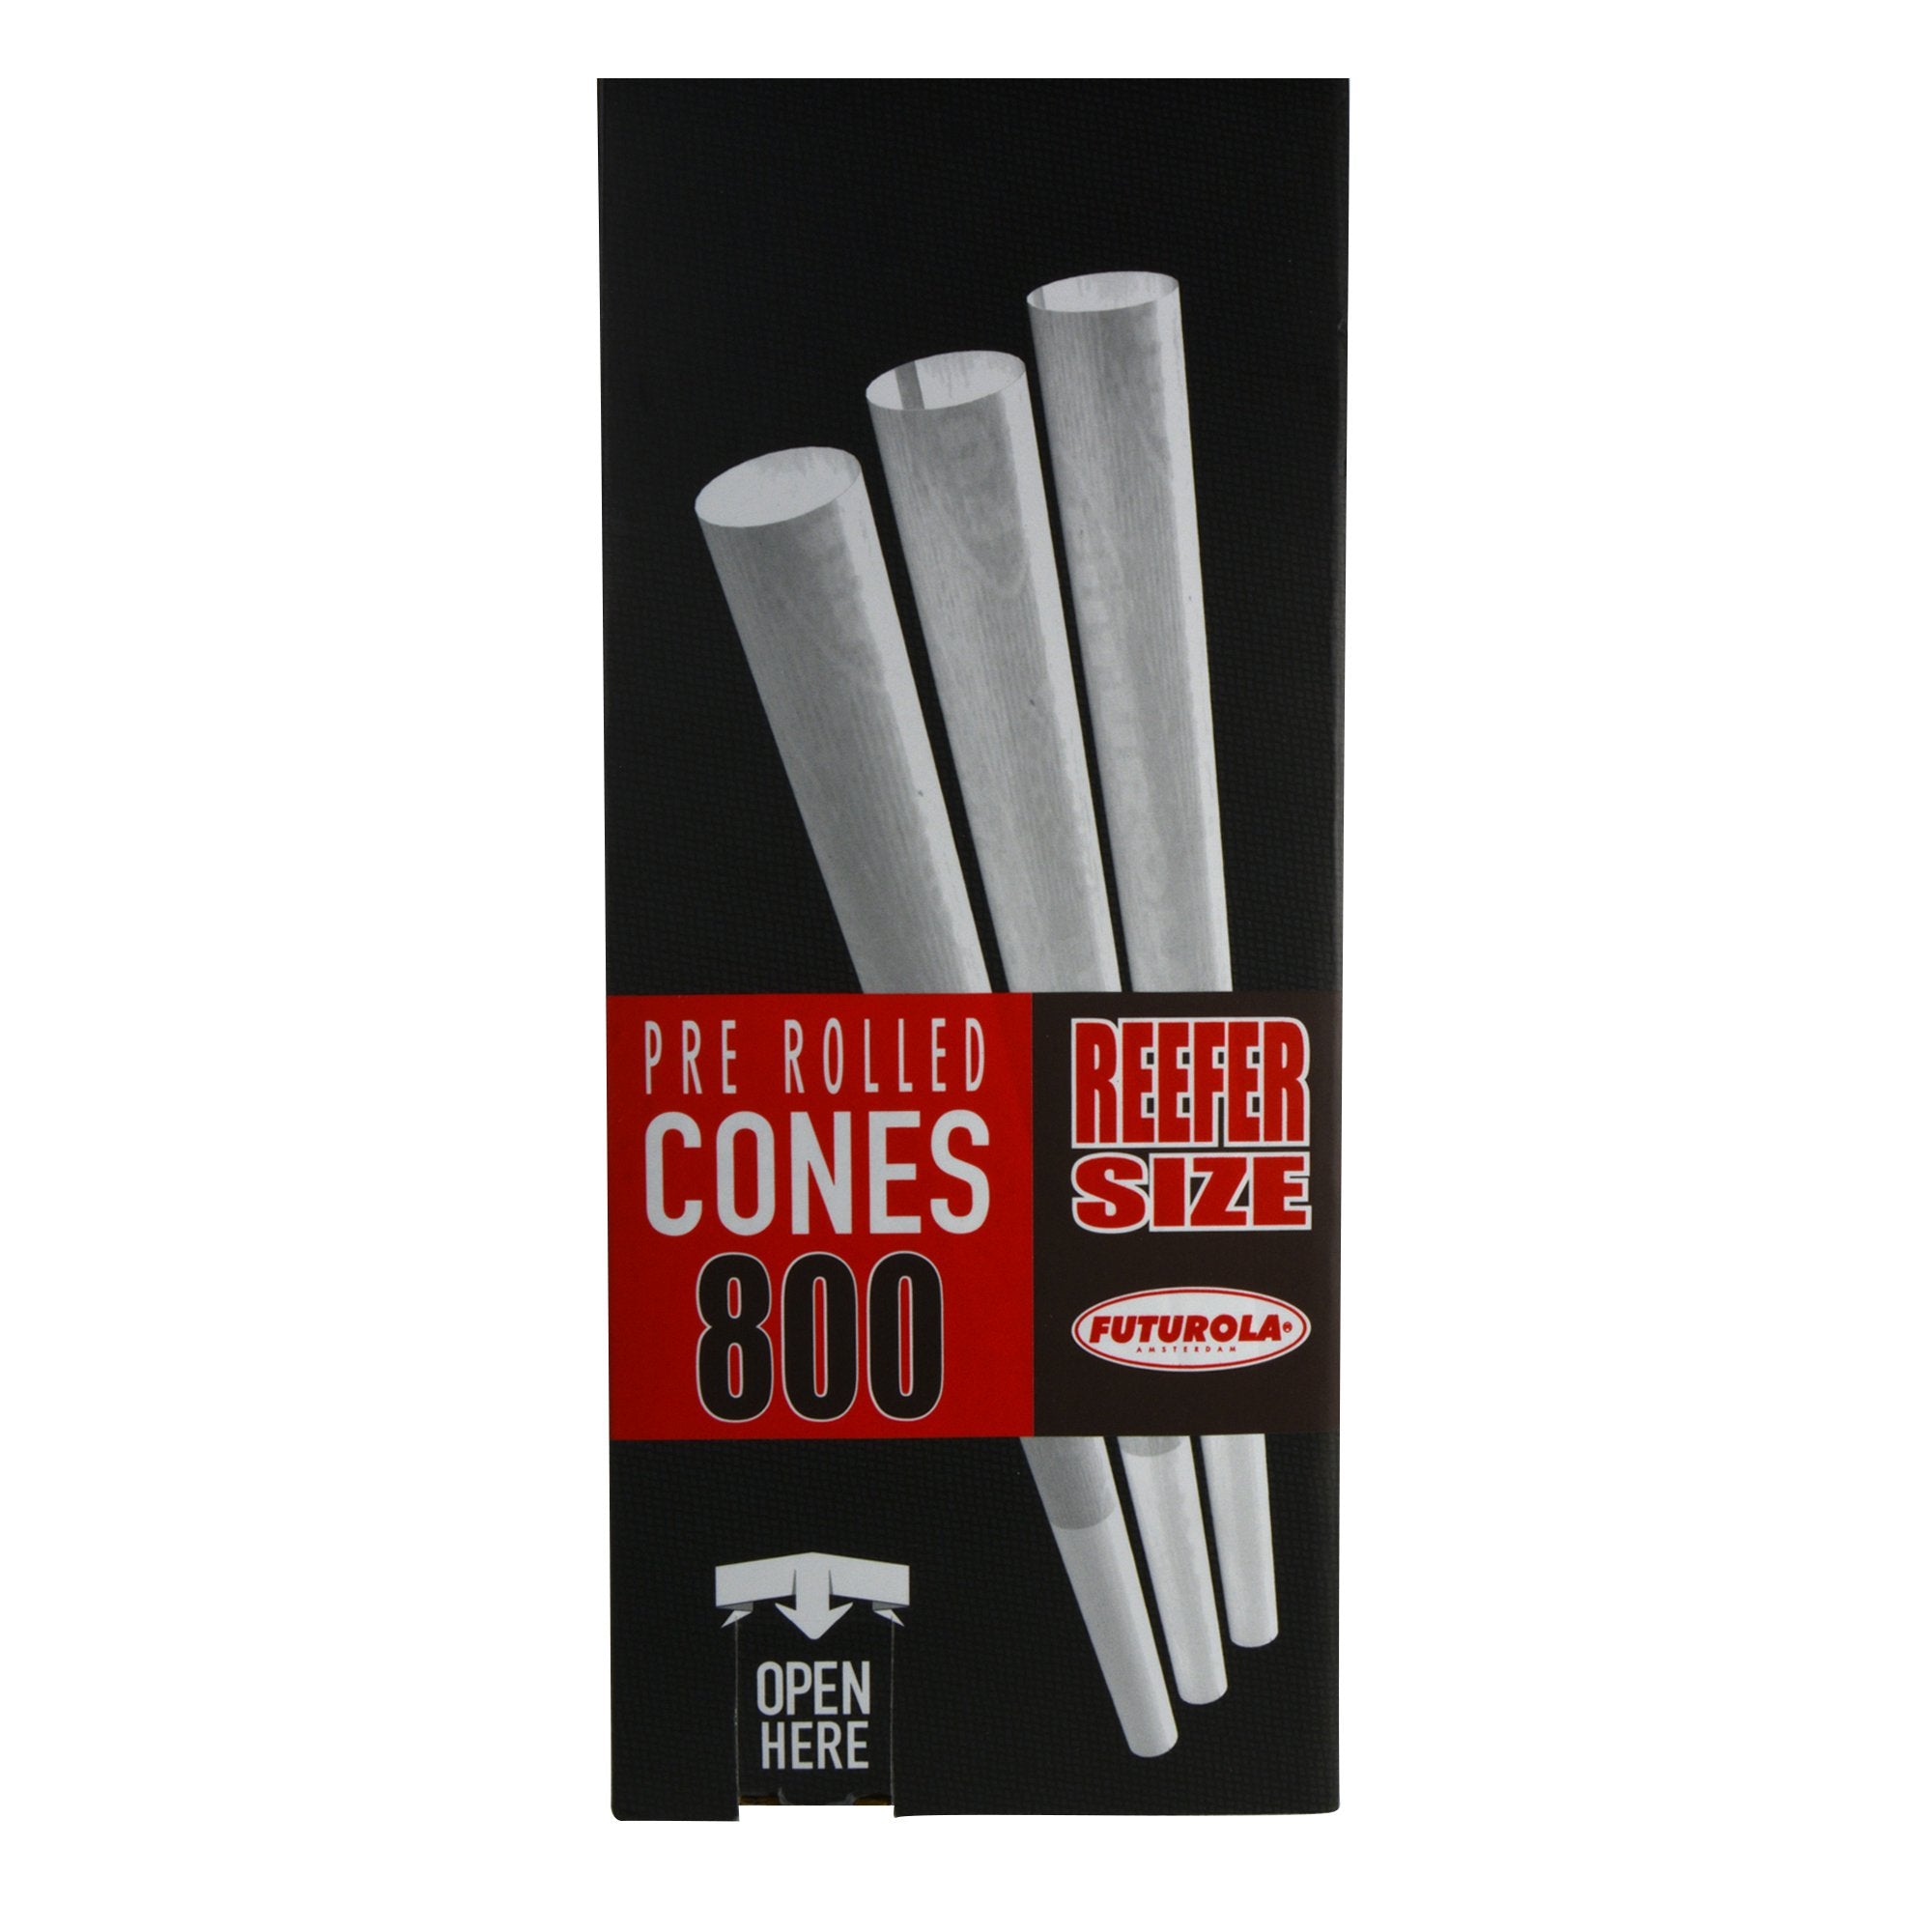 FUTUROLA | Reefer Size Pre-Rolled Cones | 98mm - Classic White Paper - 800 Count - 3